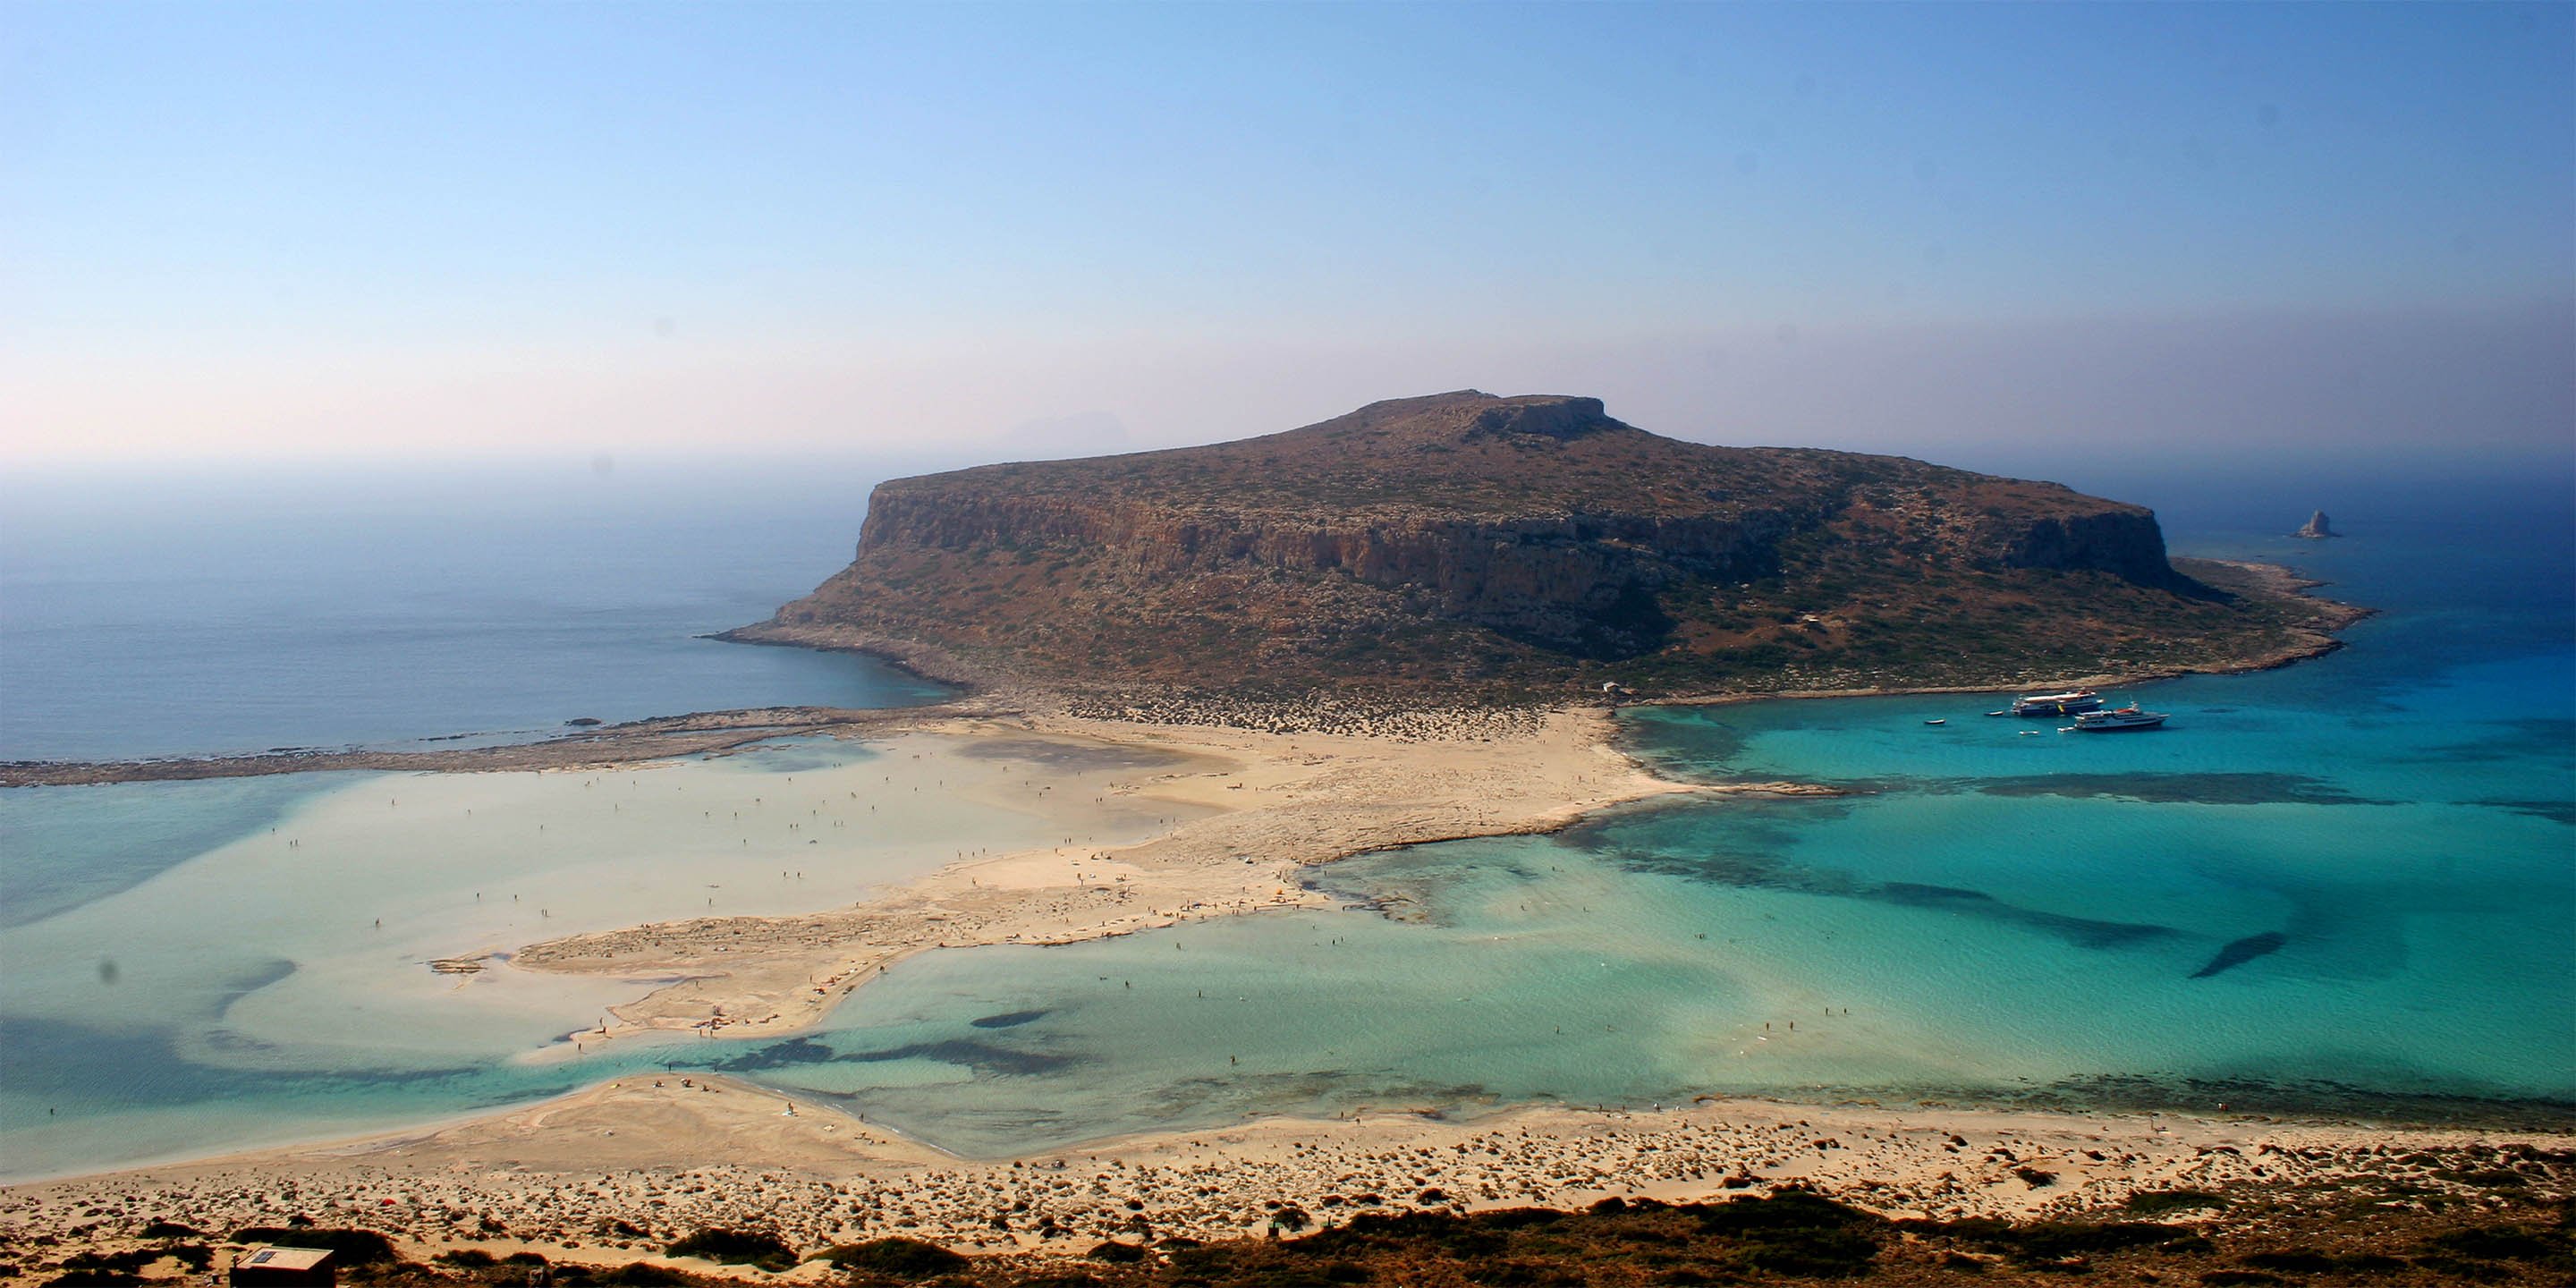 The beach of Balos in Chania, Crete